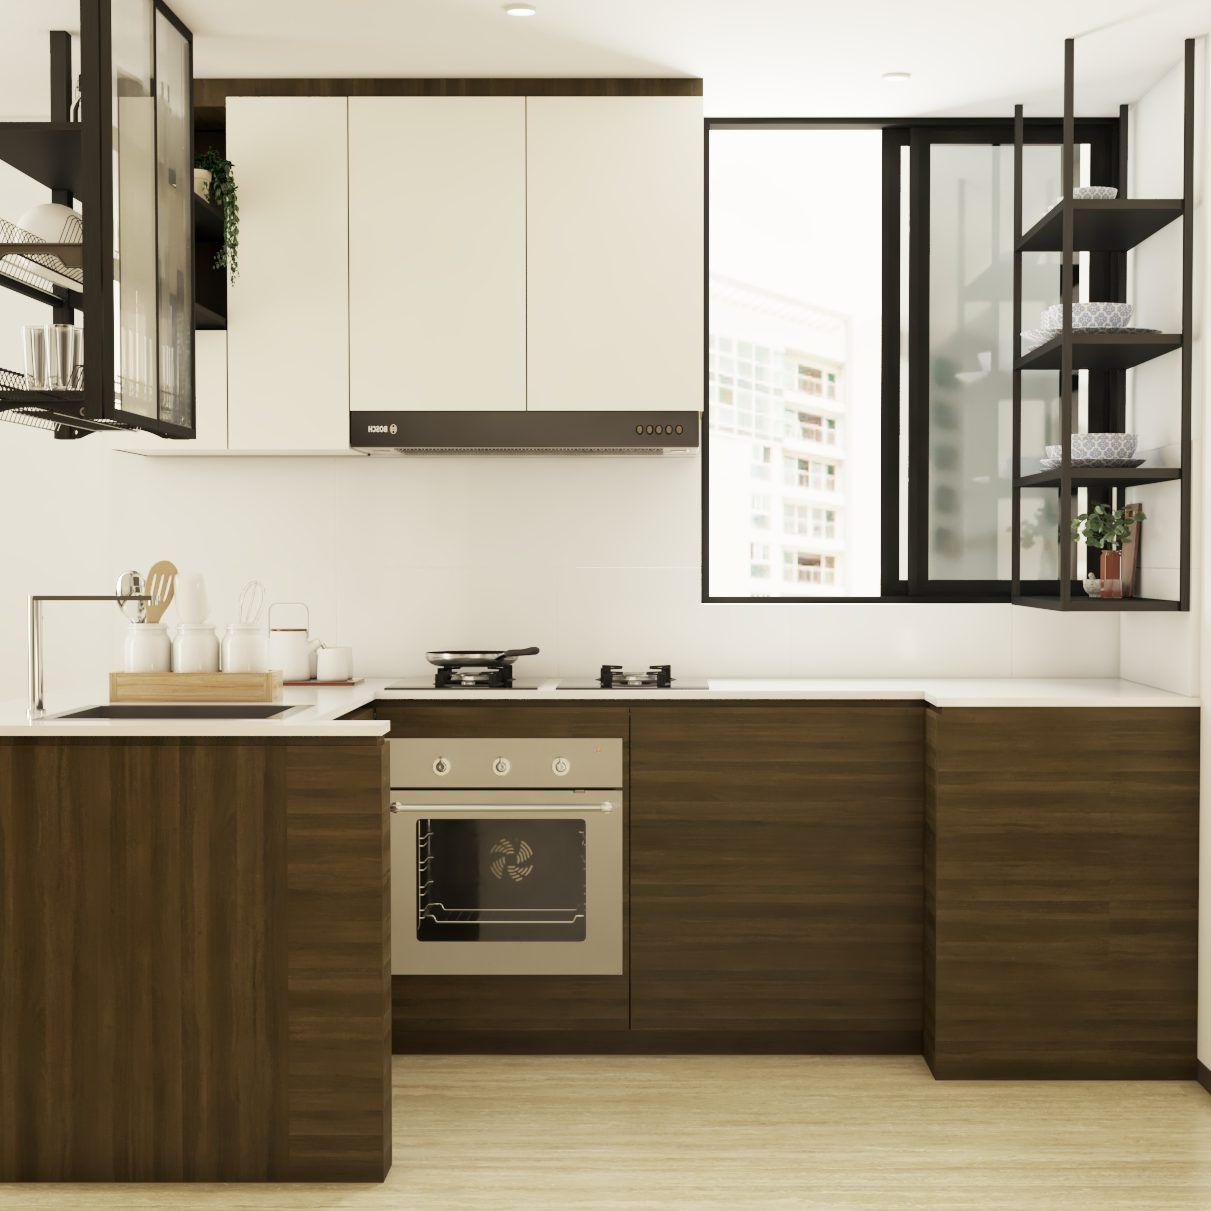 White And Brown Laminates Design For Modern Kitchens